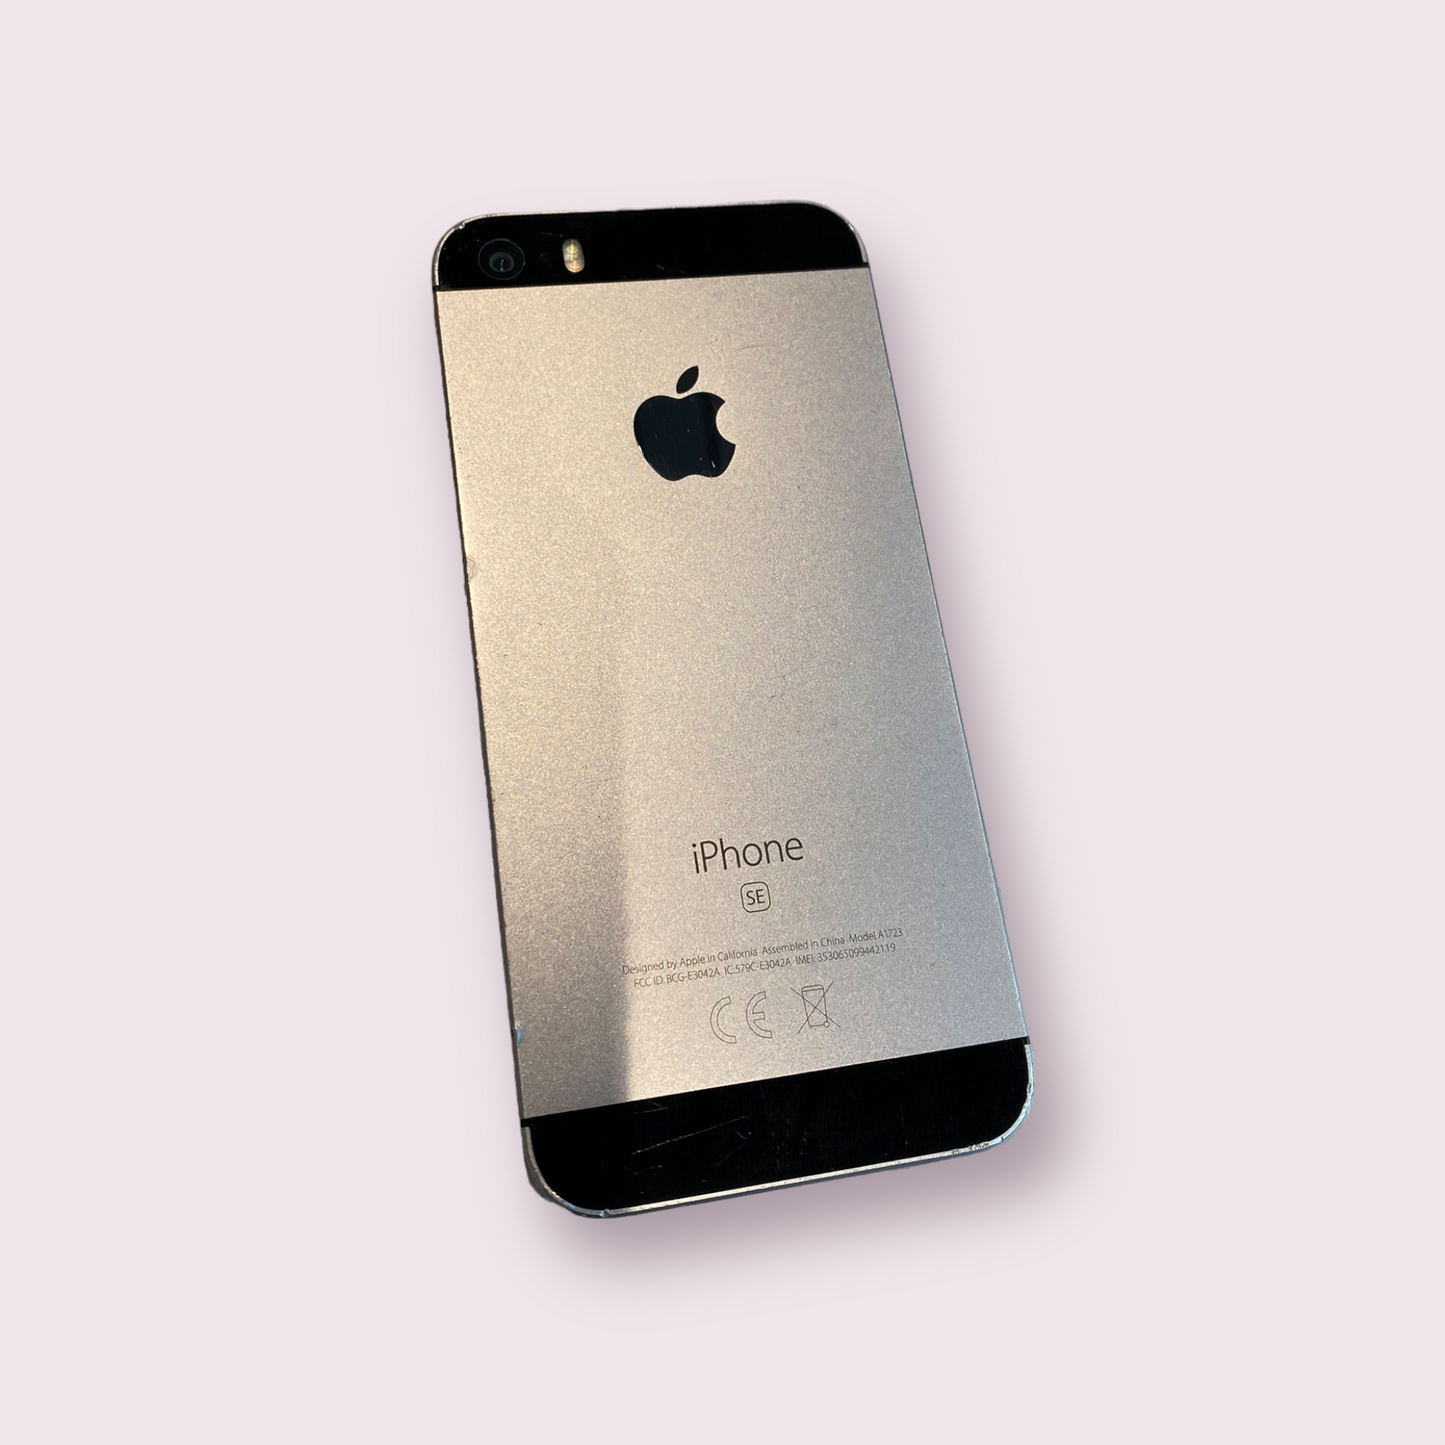 Apple iPhone SE 32gb space grey - Unlocked - Grade B